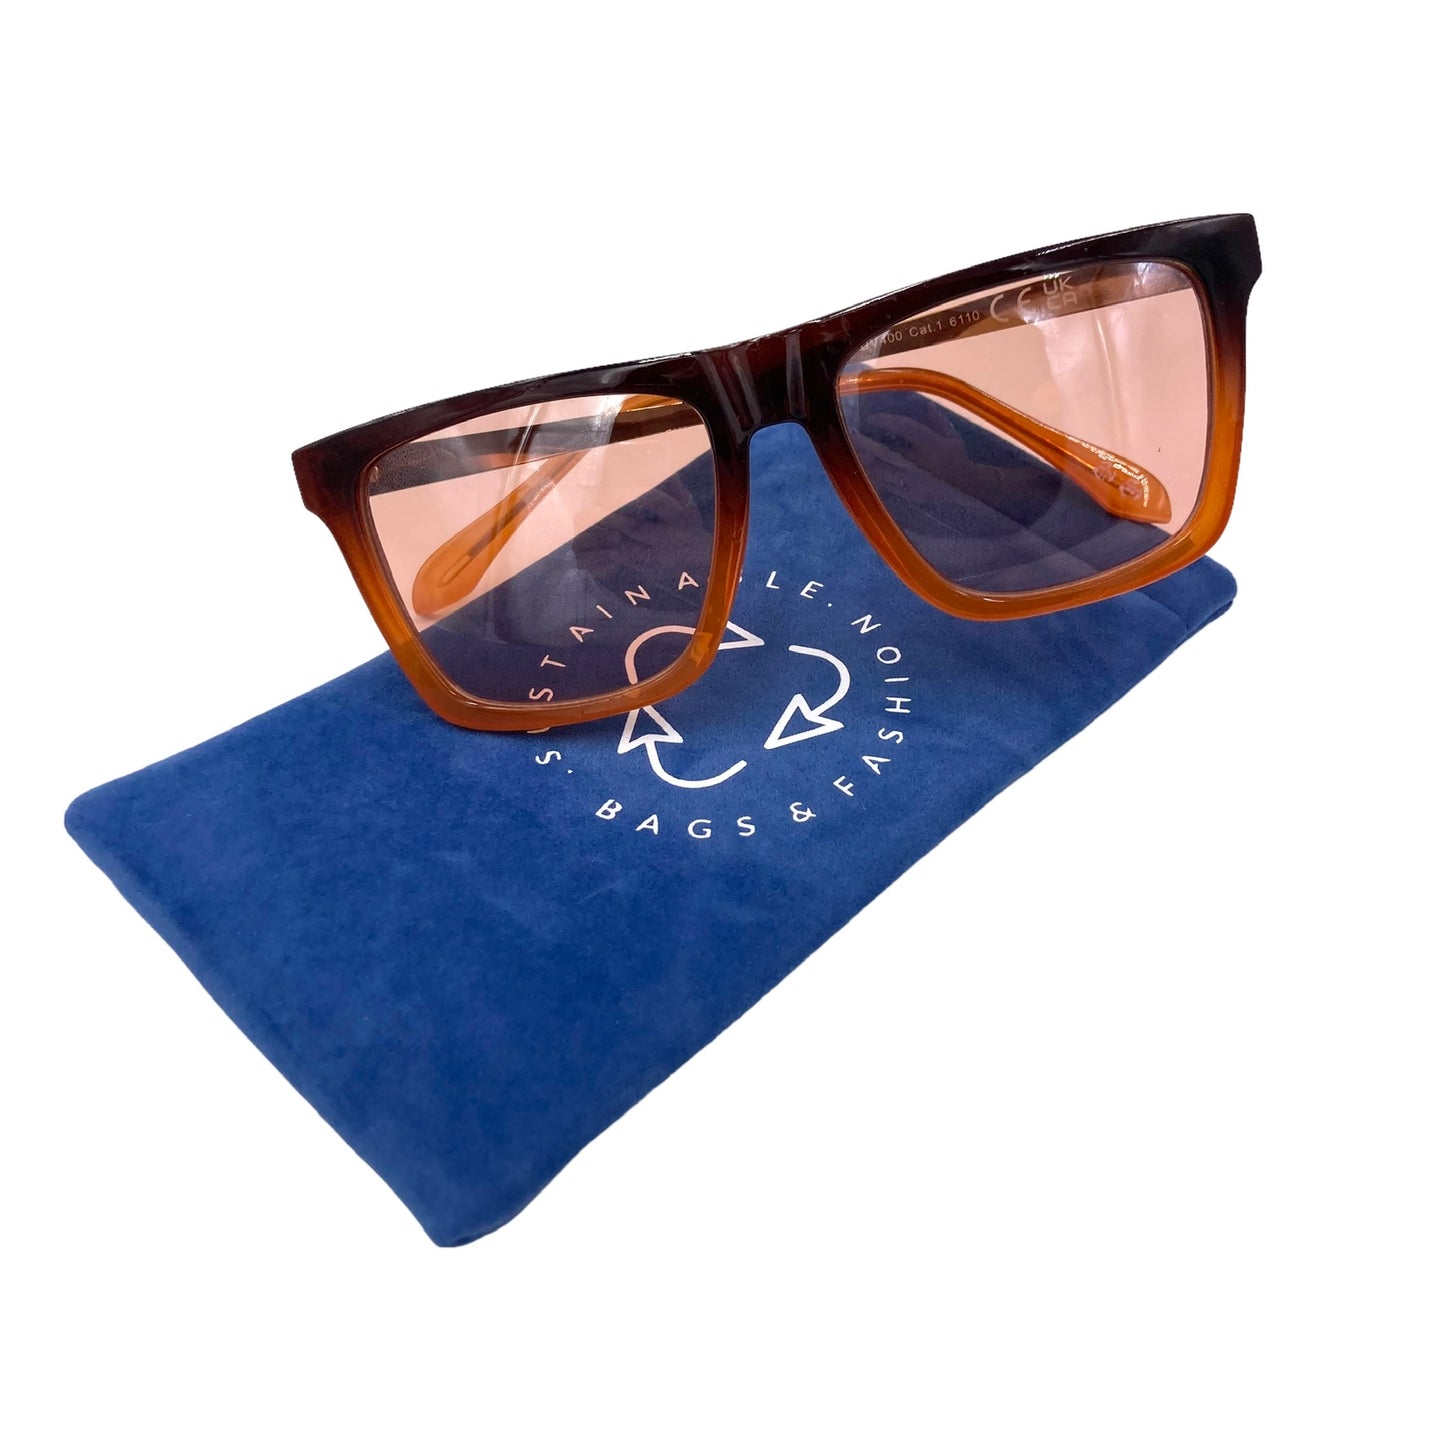 Recycled Plastic Sunglasses - Kate Style, Orange Blossom